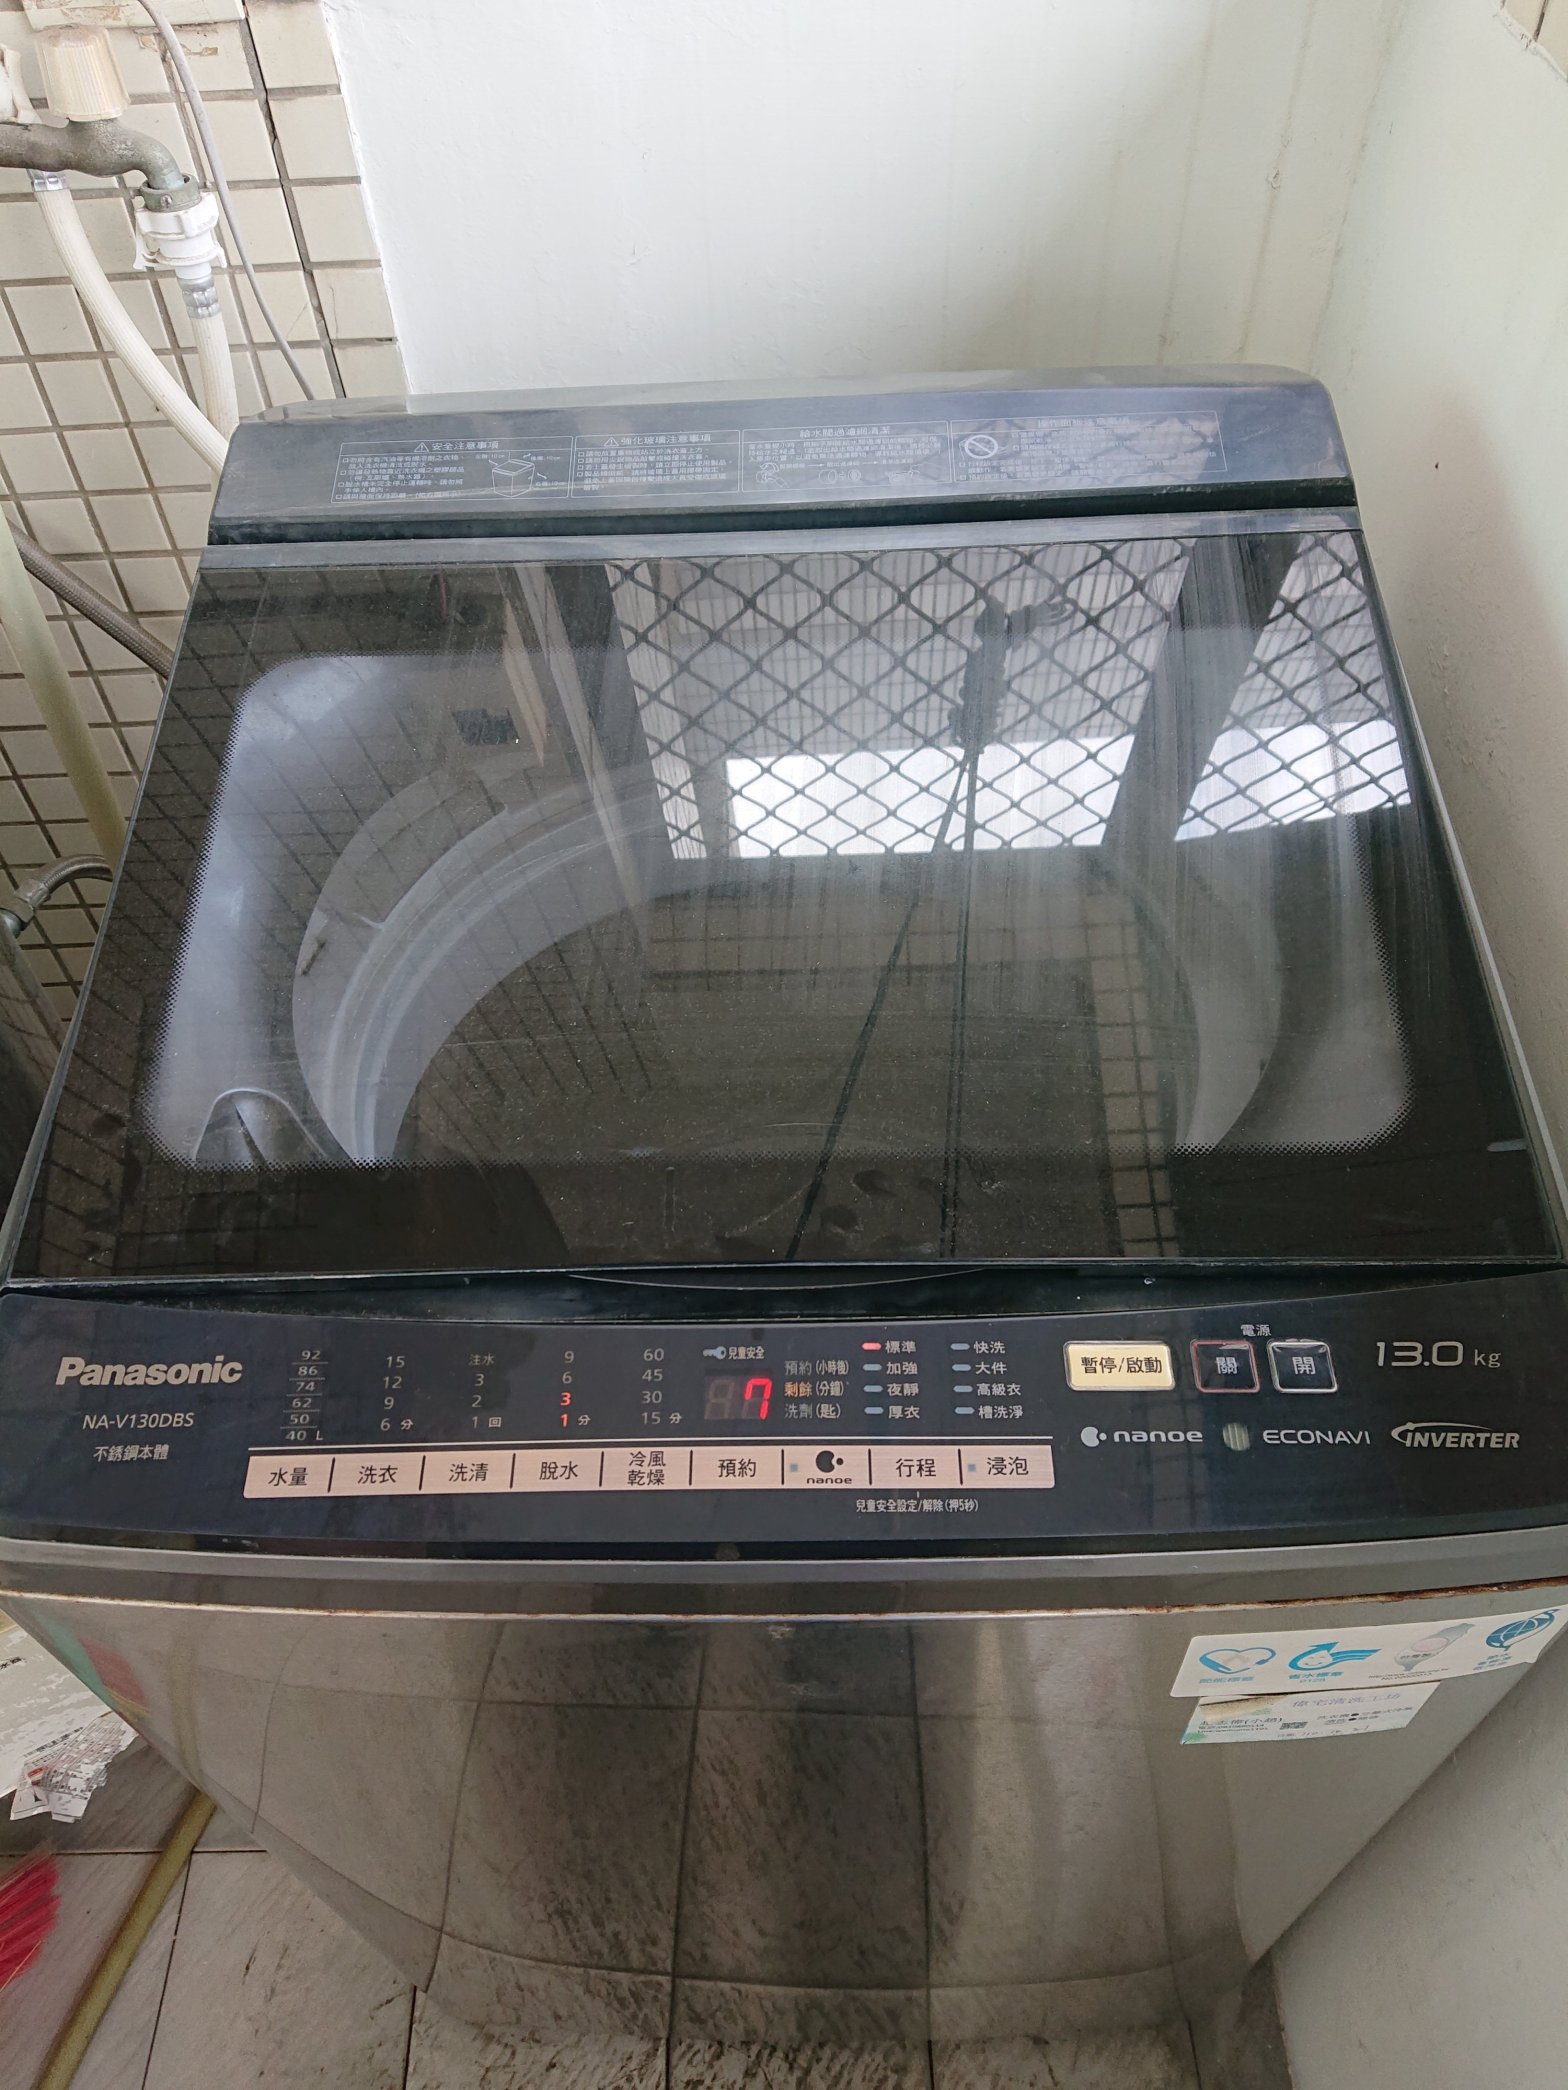 國際牌洗衣機NA-V130DBS